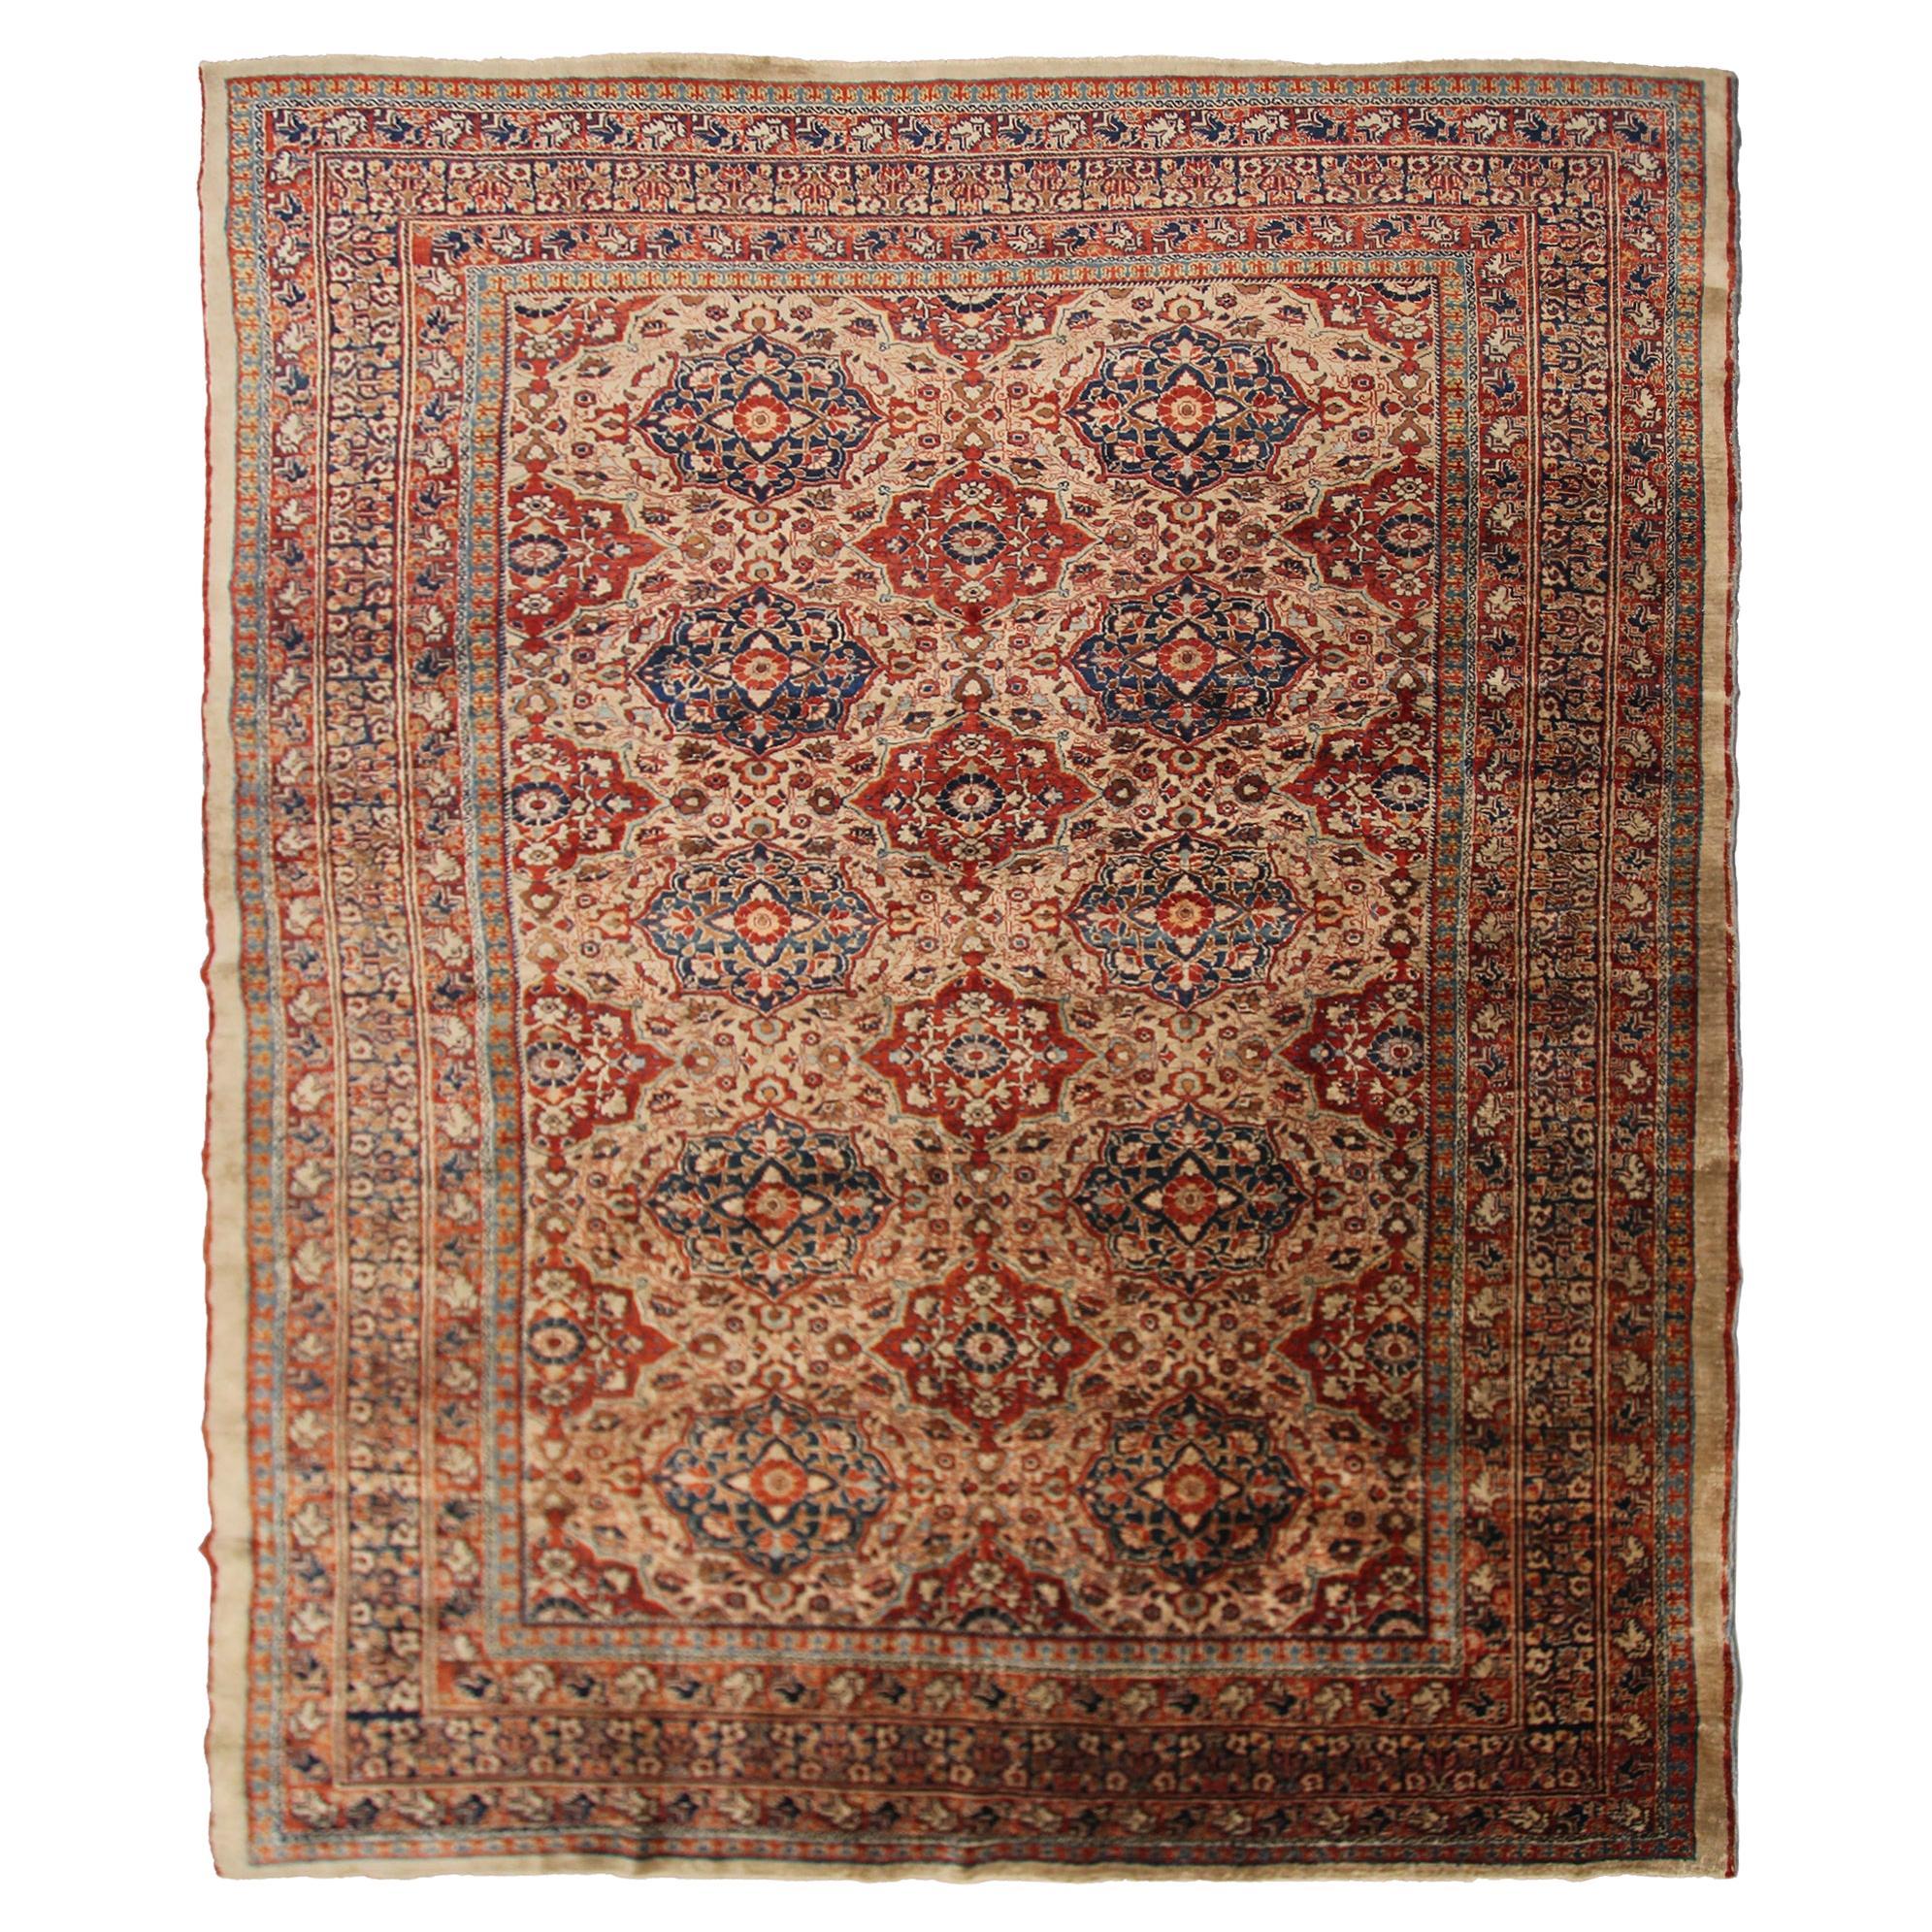 Mid 1800's Rare Antique Silk Heriz Rug Masterpiece 5x6 Tapestry 1860